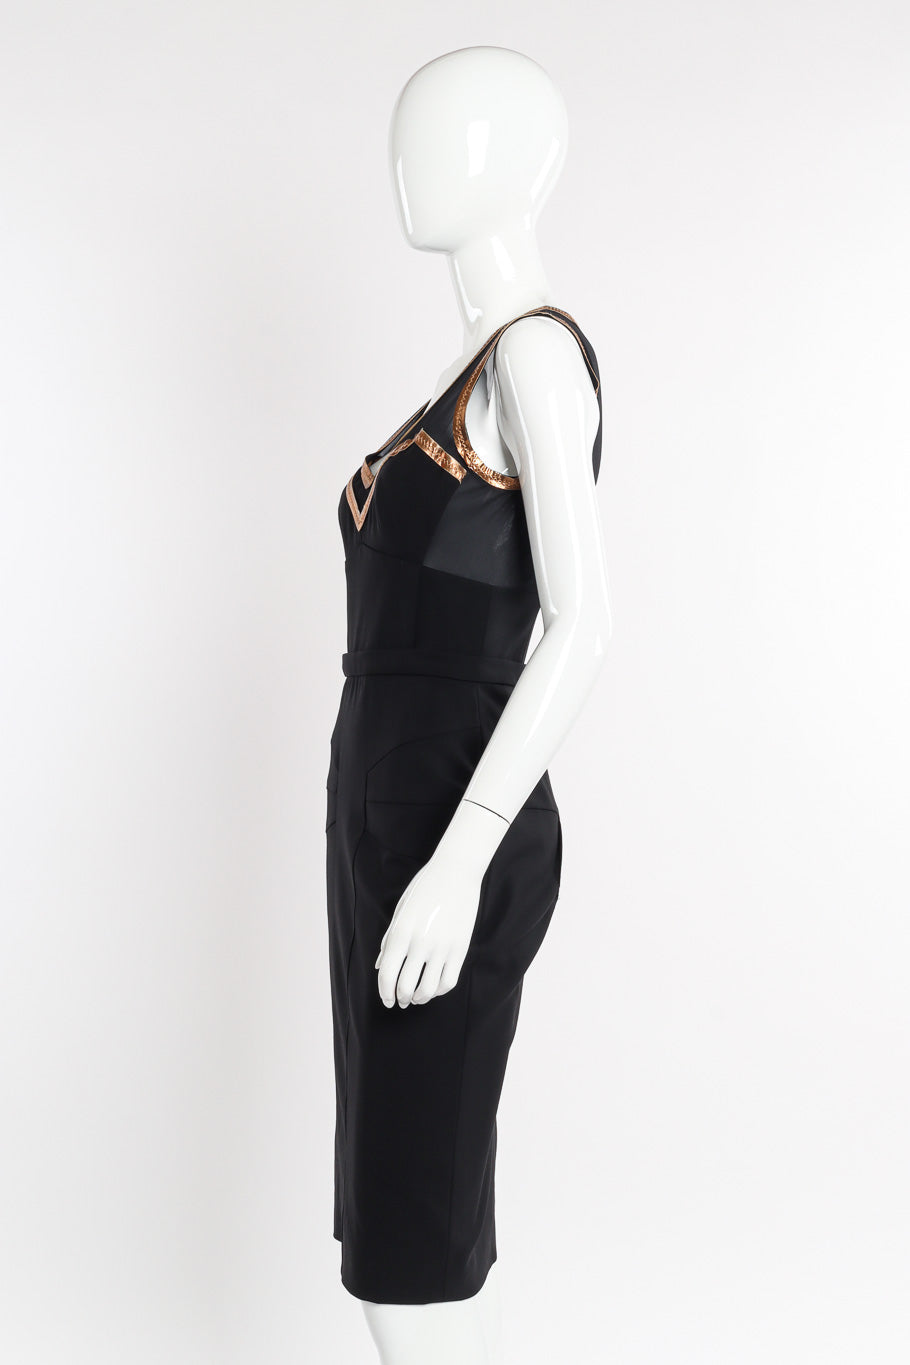 Dolce & Gabbana Metallic Trim Sheath Dress side view on mannequin @recessla